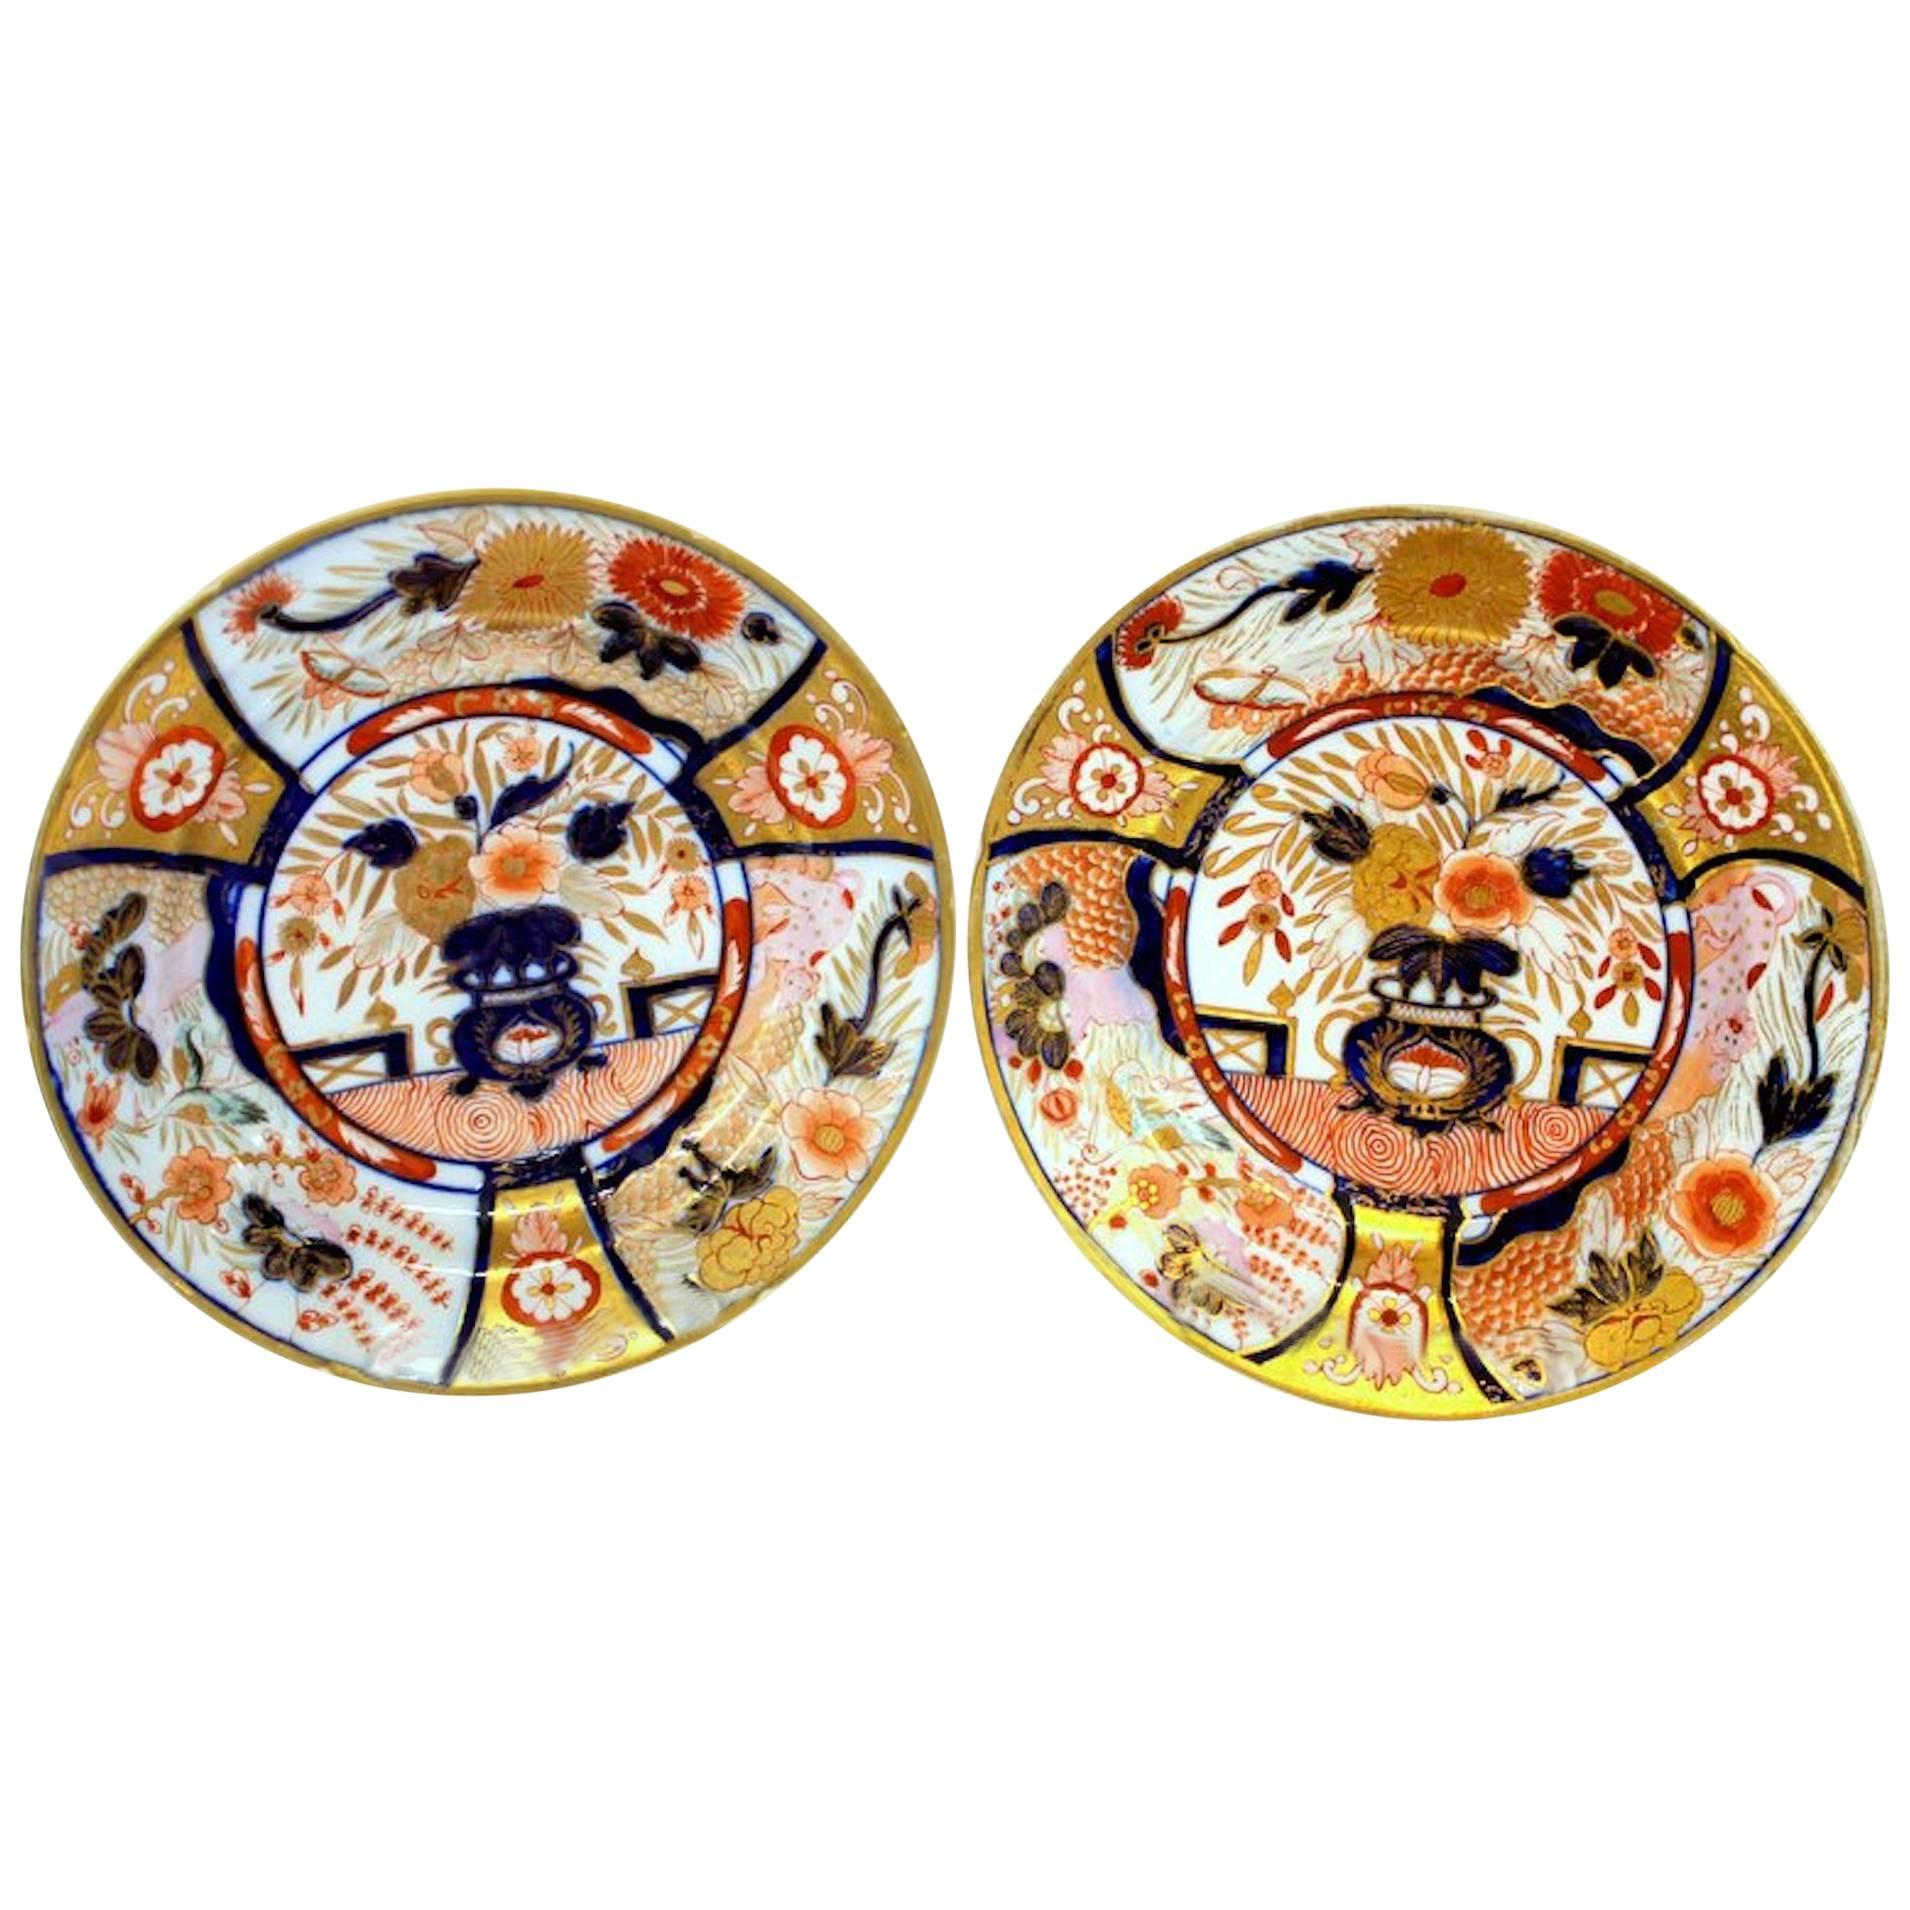 Antique English John Rose Coalport Porcelain Imari "Japan" Cabinet Plates, Pair